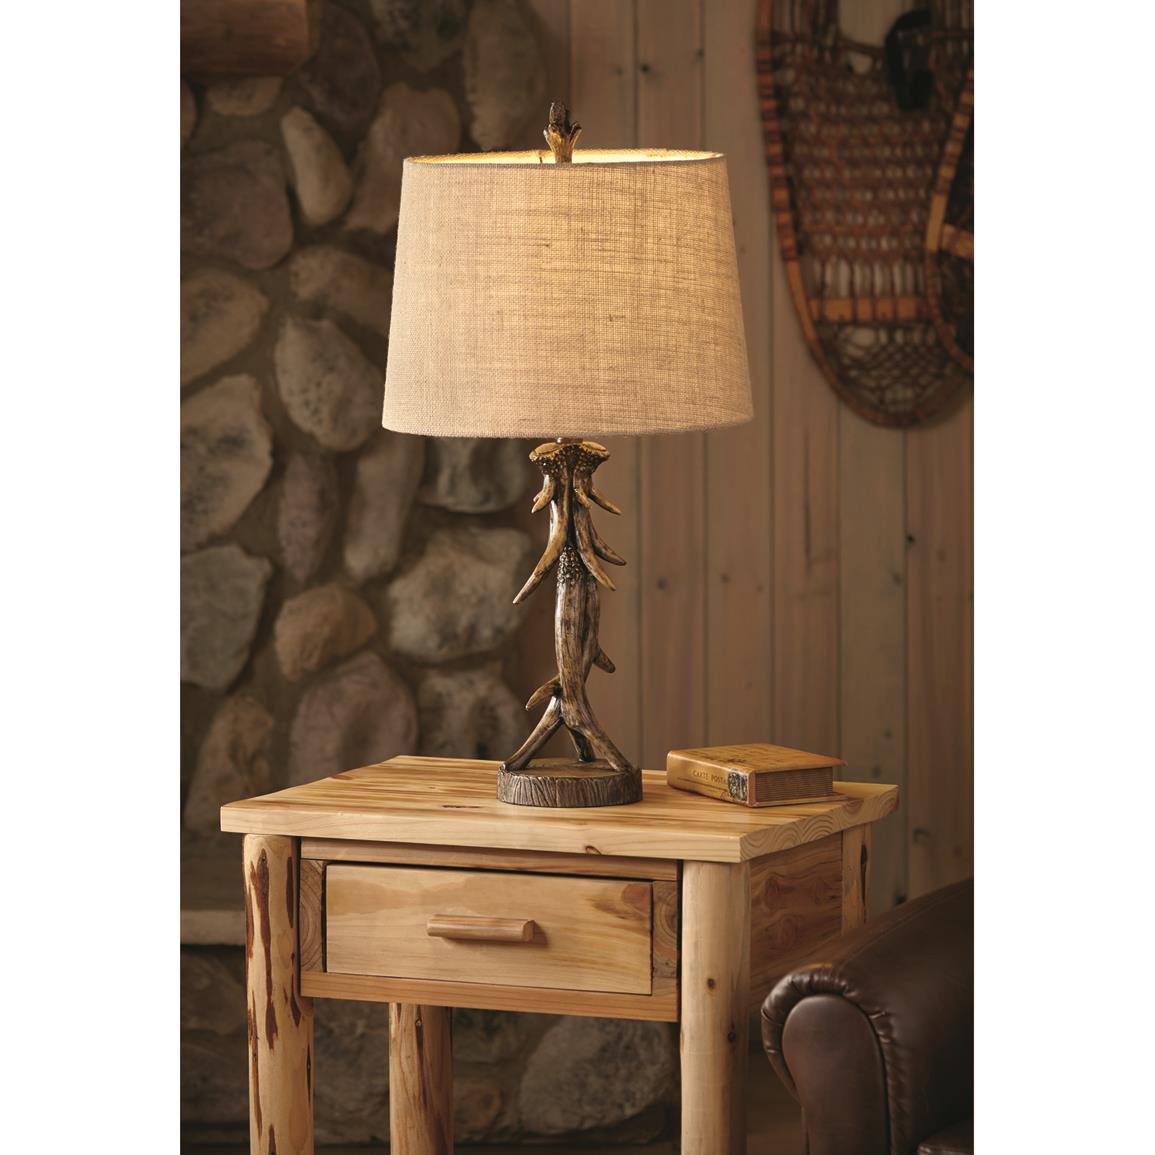 CASTLECREEK Antler Table Lamp - 704580, Lighting at Sportsman's Guide